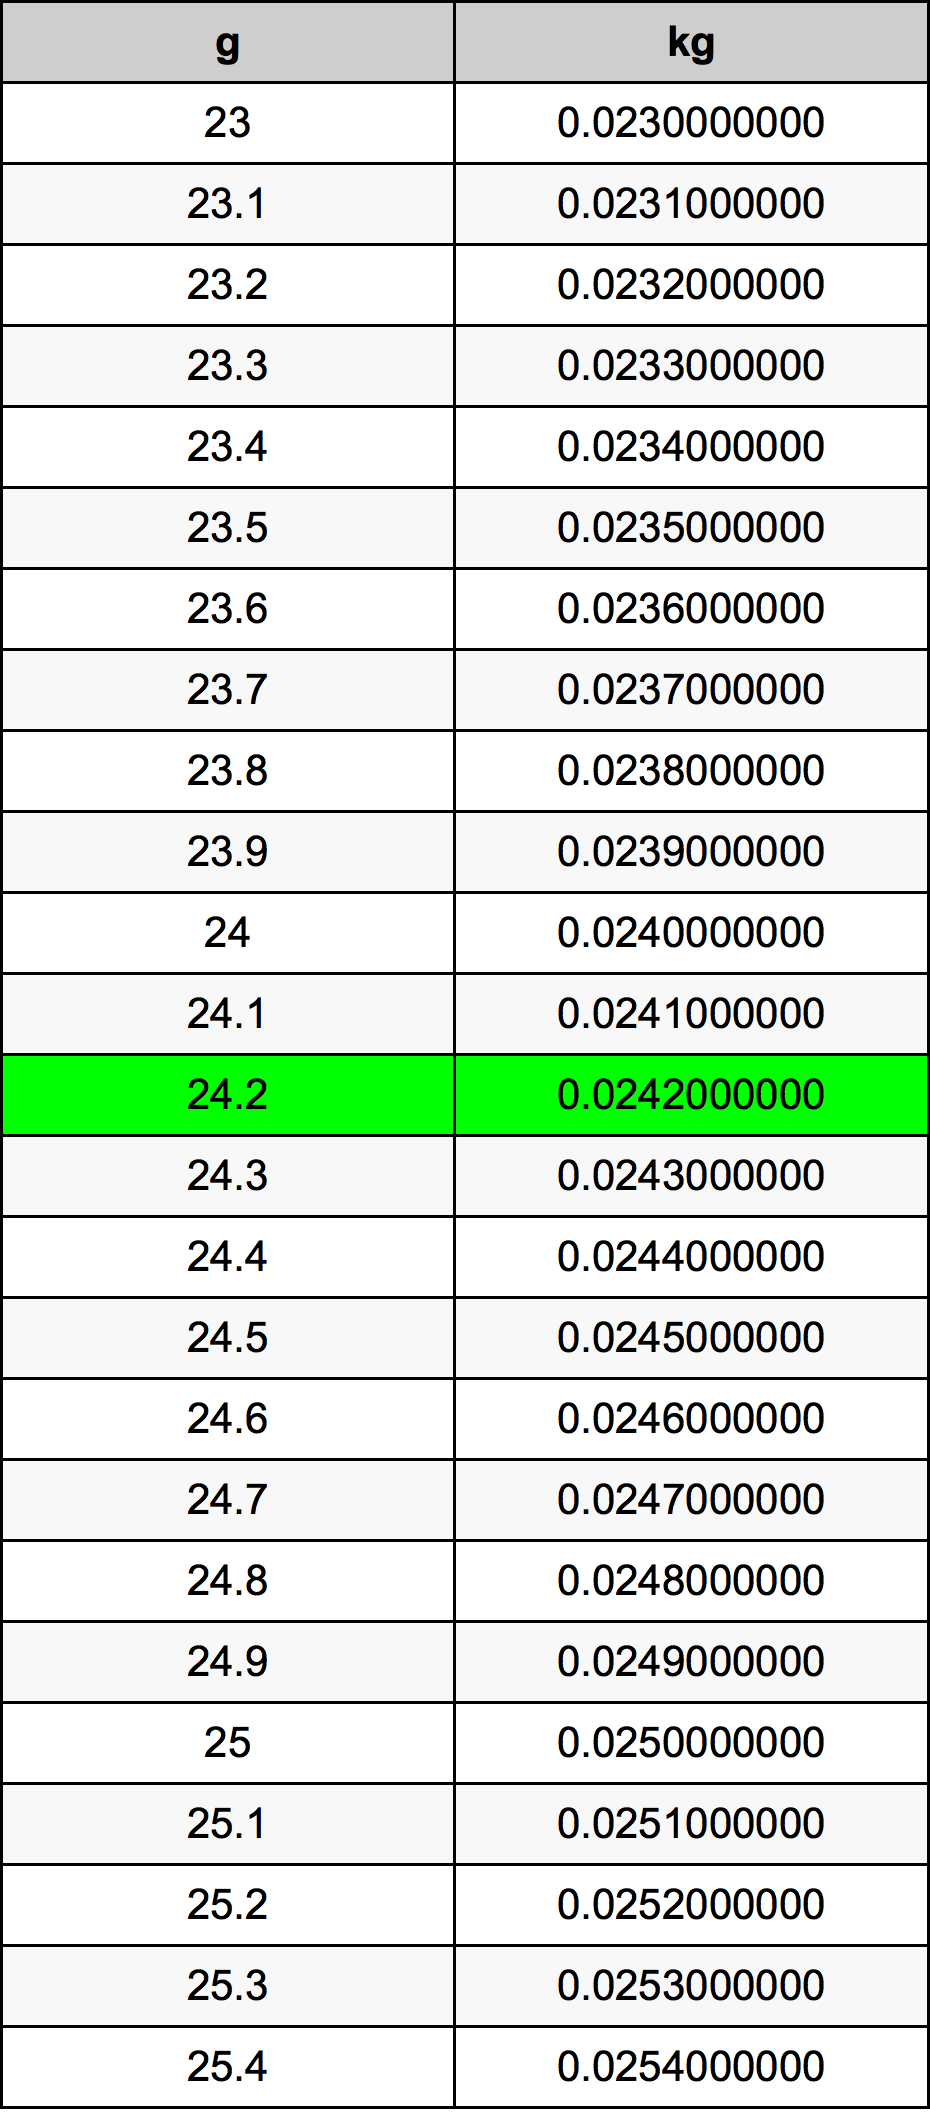 24.2 غرام جدول تحويل